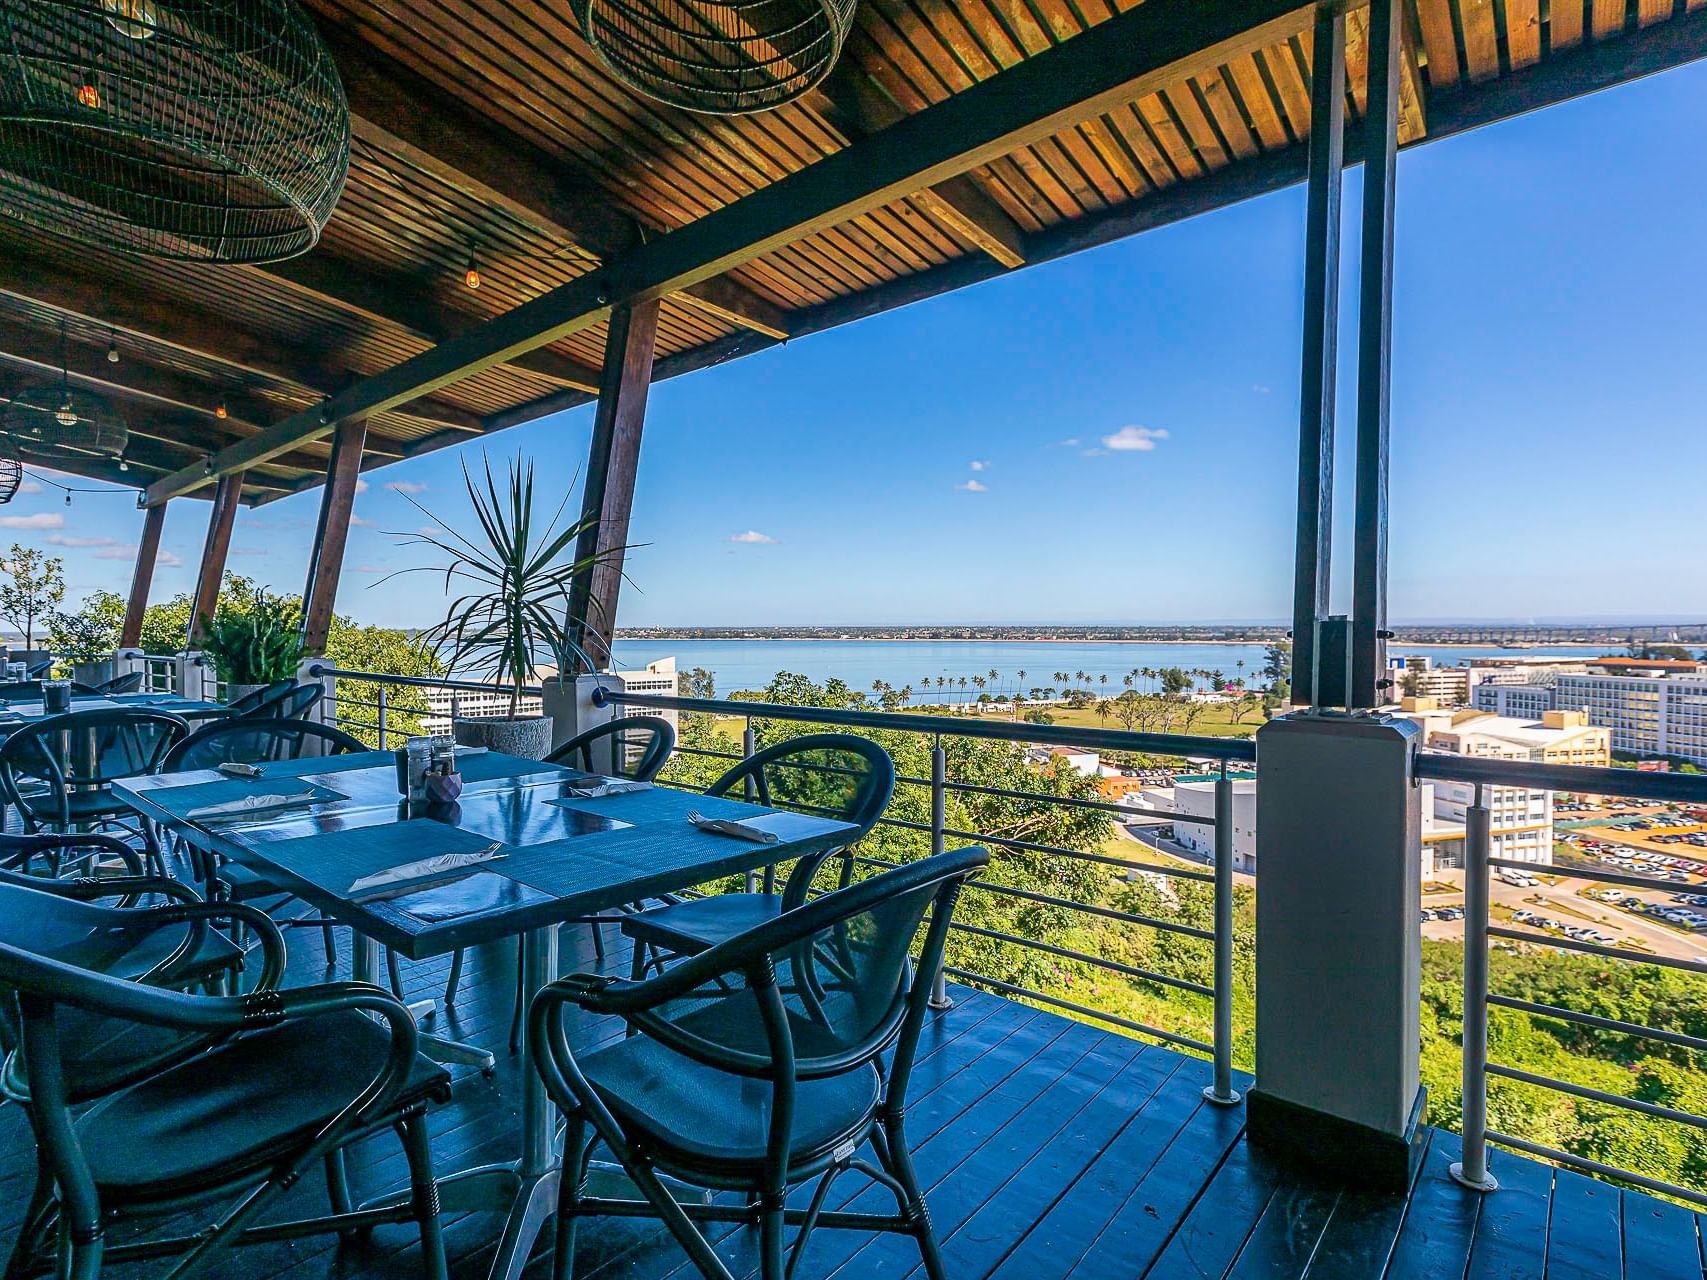 Bar Por Do Sol dining area with a sea view at Cardoso Hotel